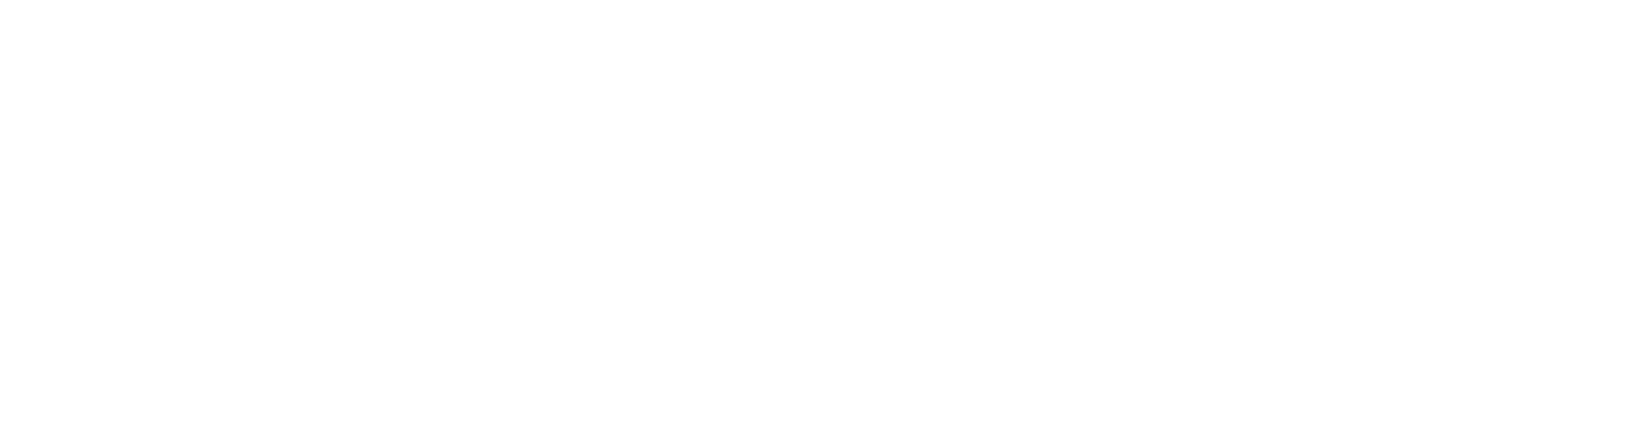 Petros Pharmaceuticals logo large for dark backgrounds (transparent PNG)